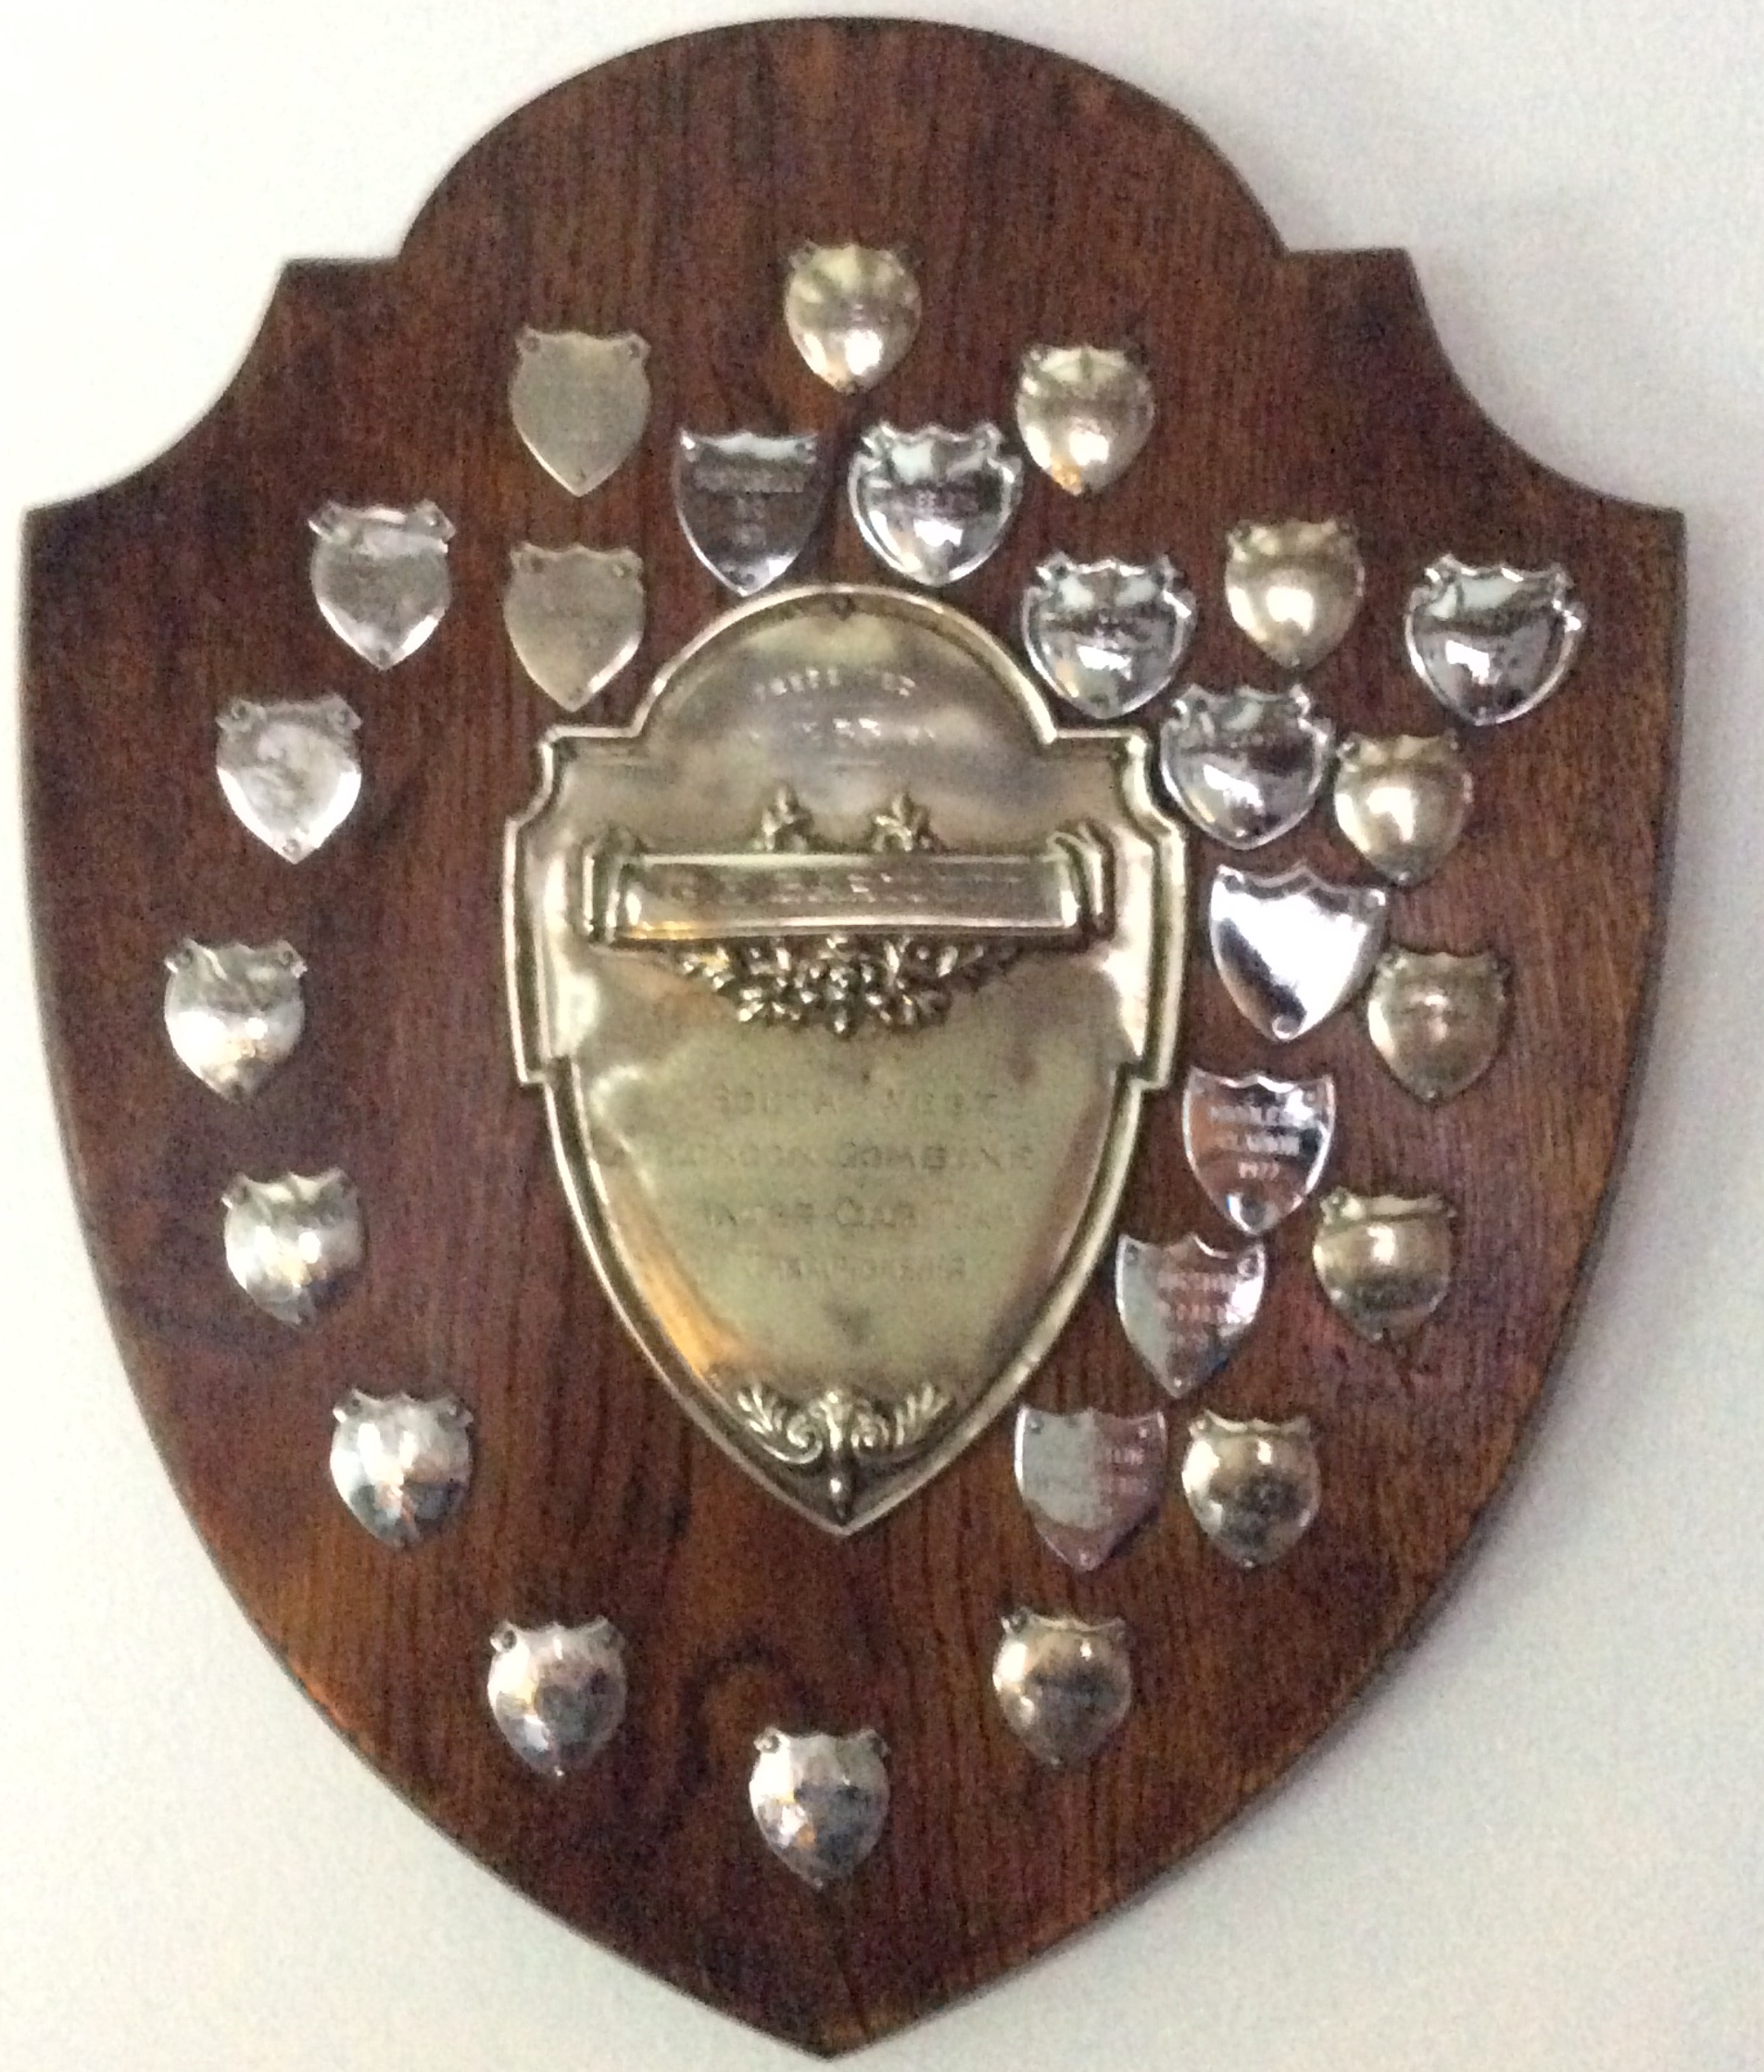 Large 1953 London Cycling Trophy Shield